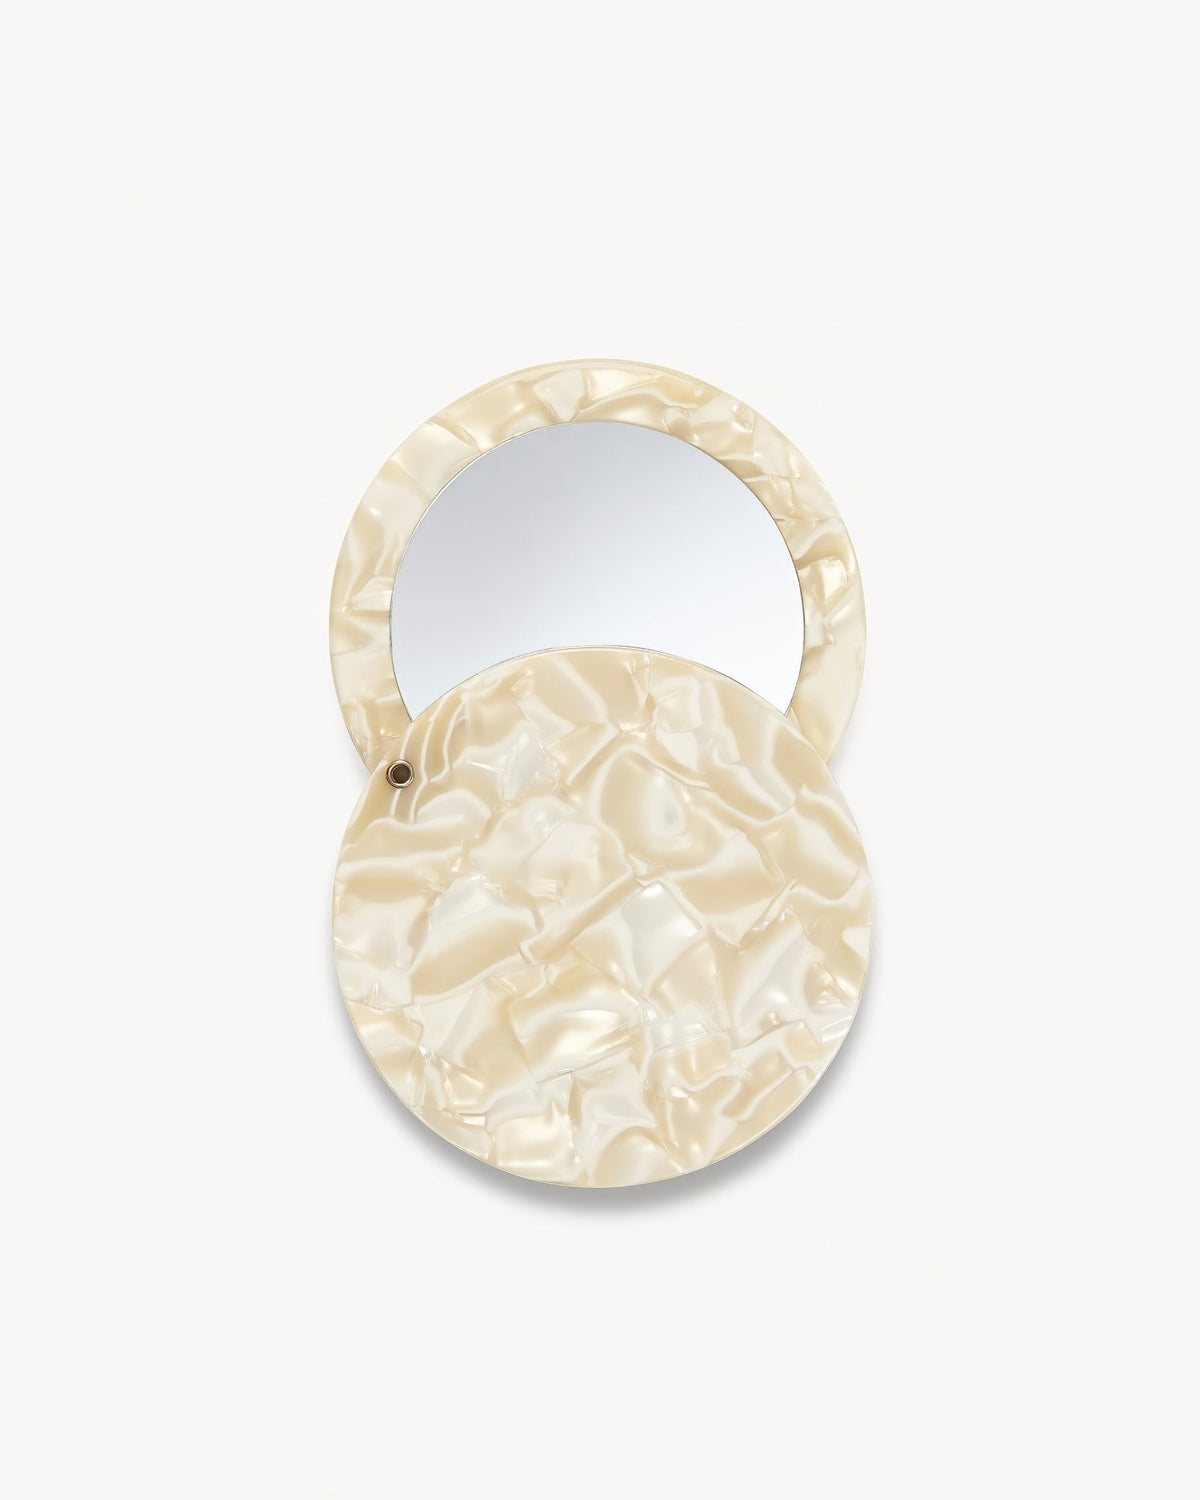 MACHETE Circle Mirror in Ivory